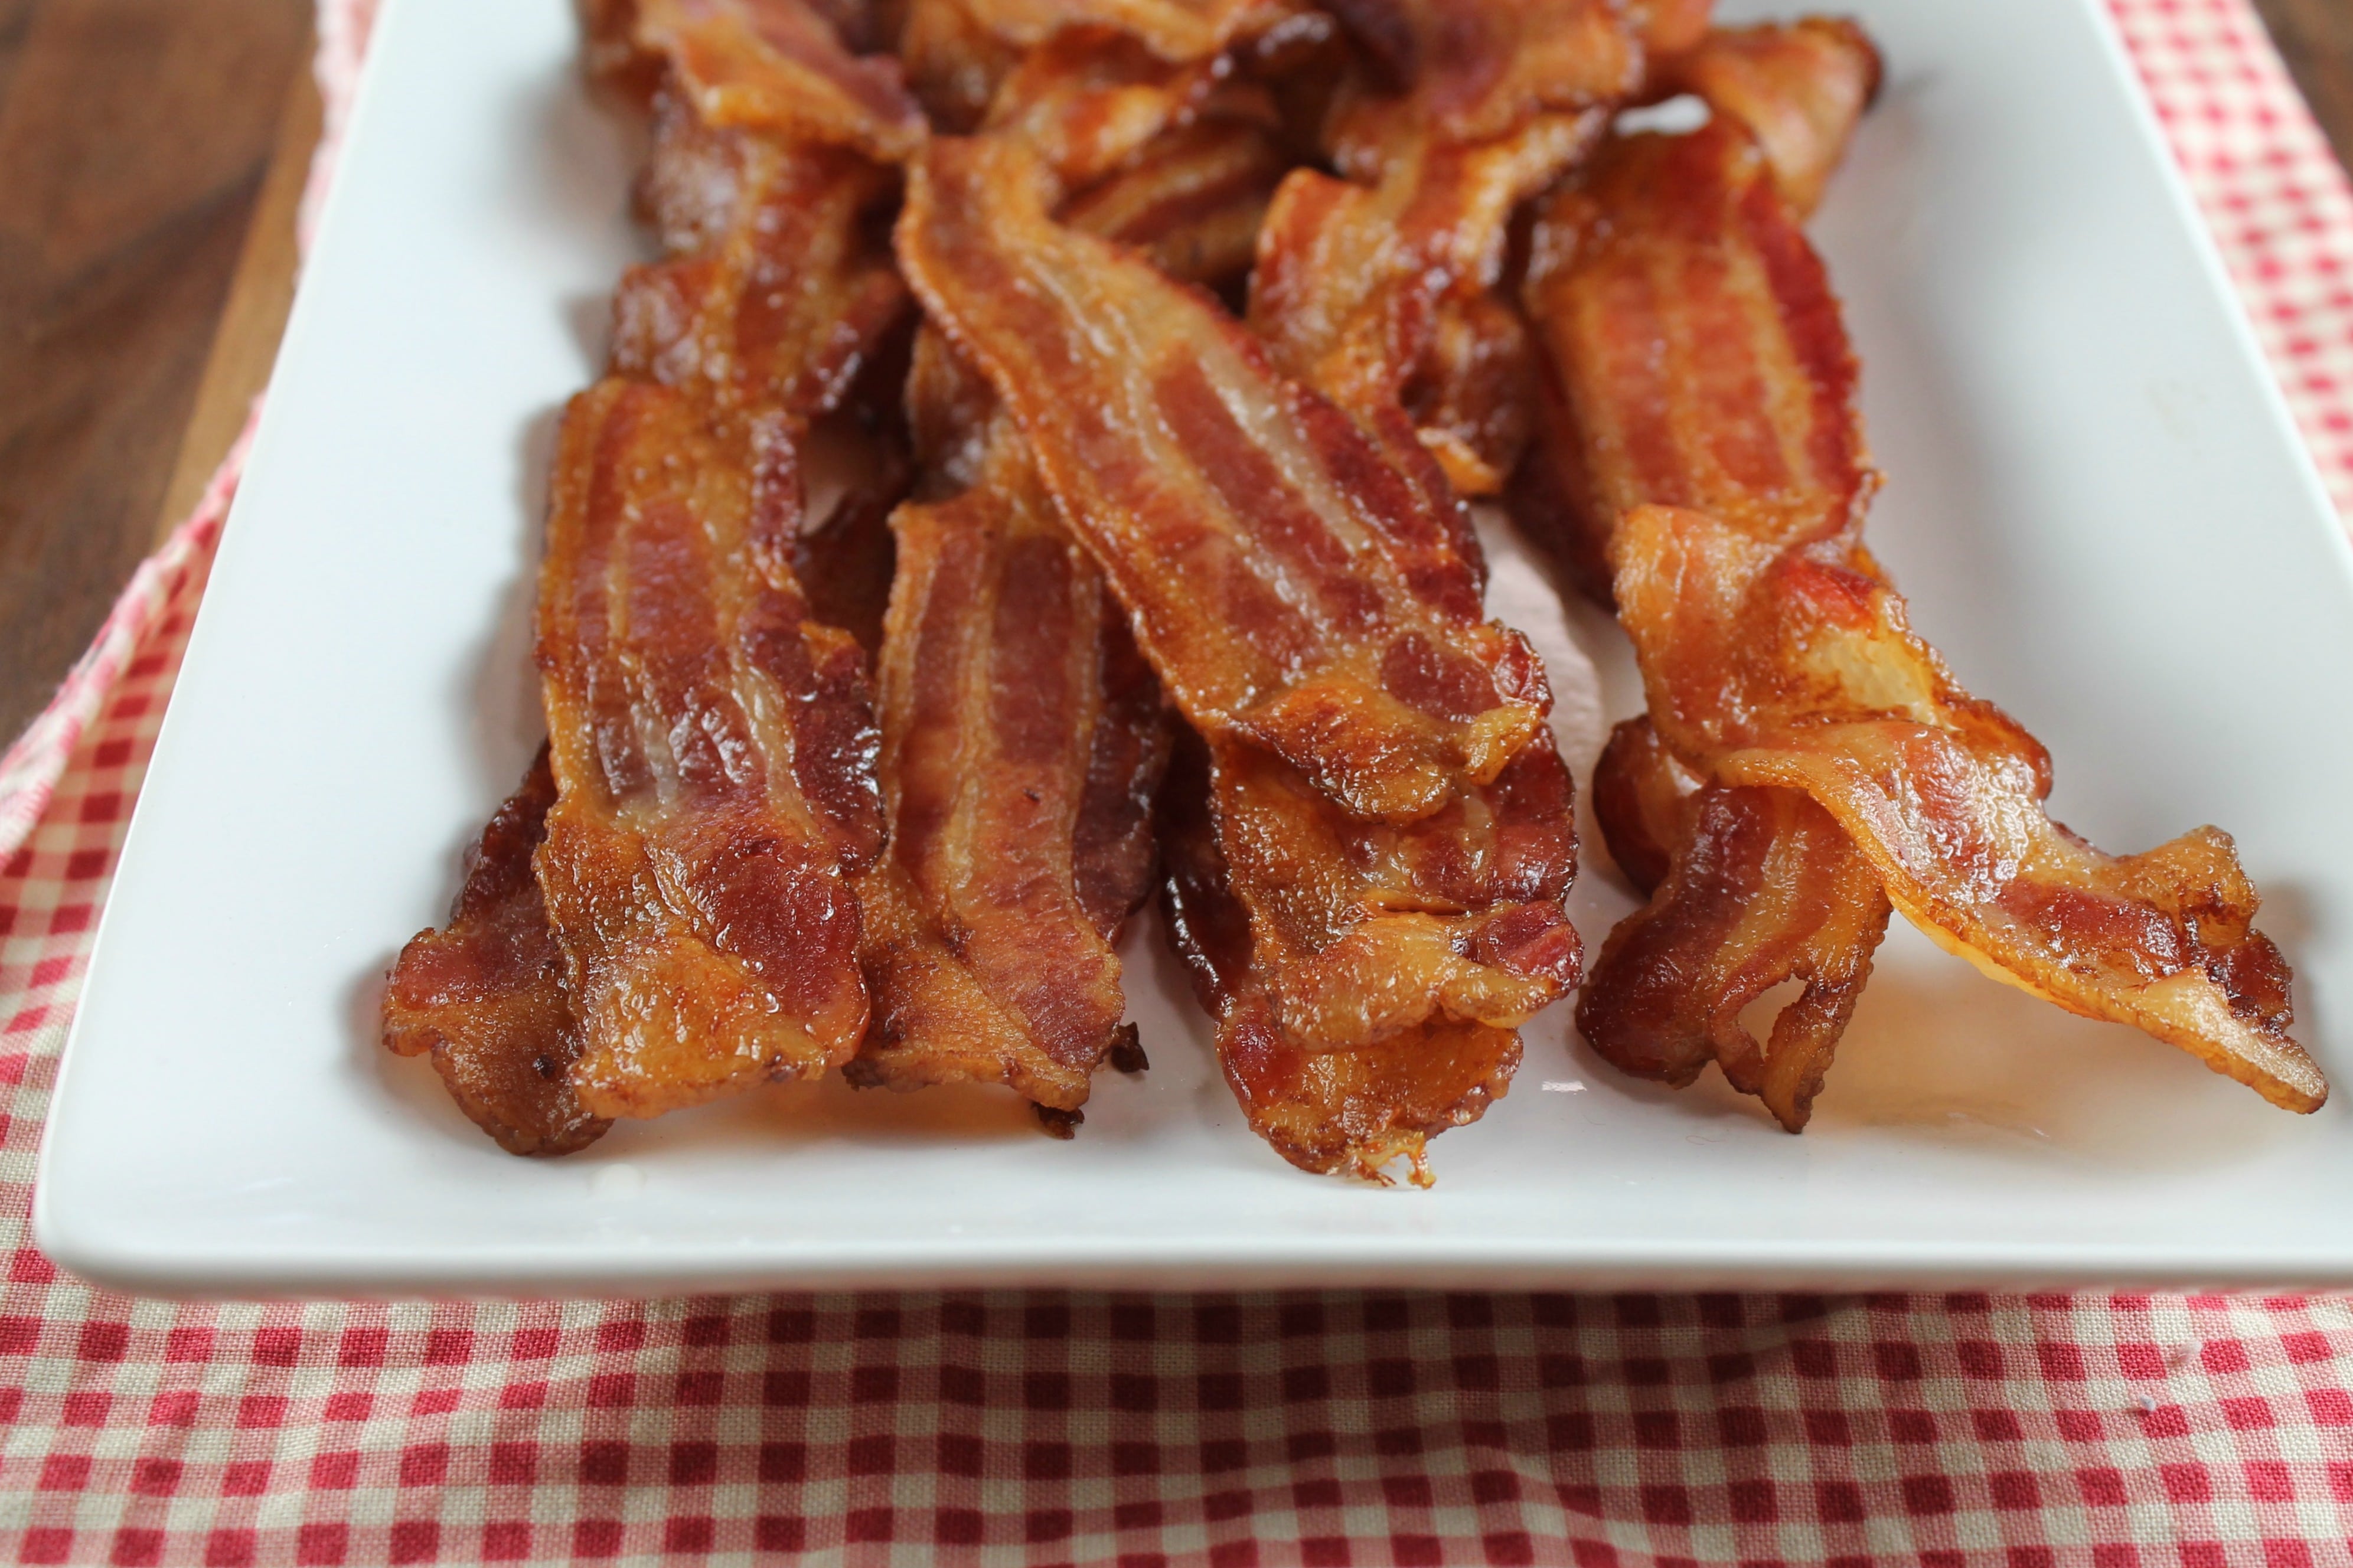 Crisp bacon slices